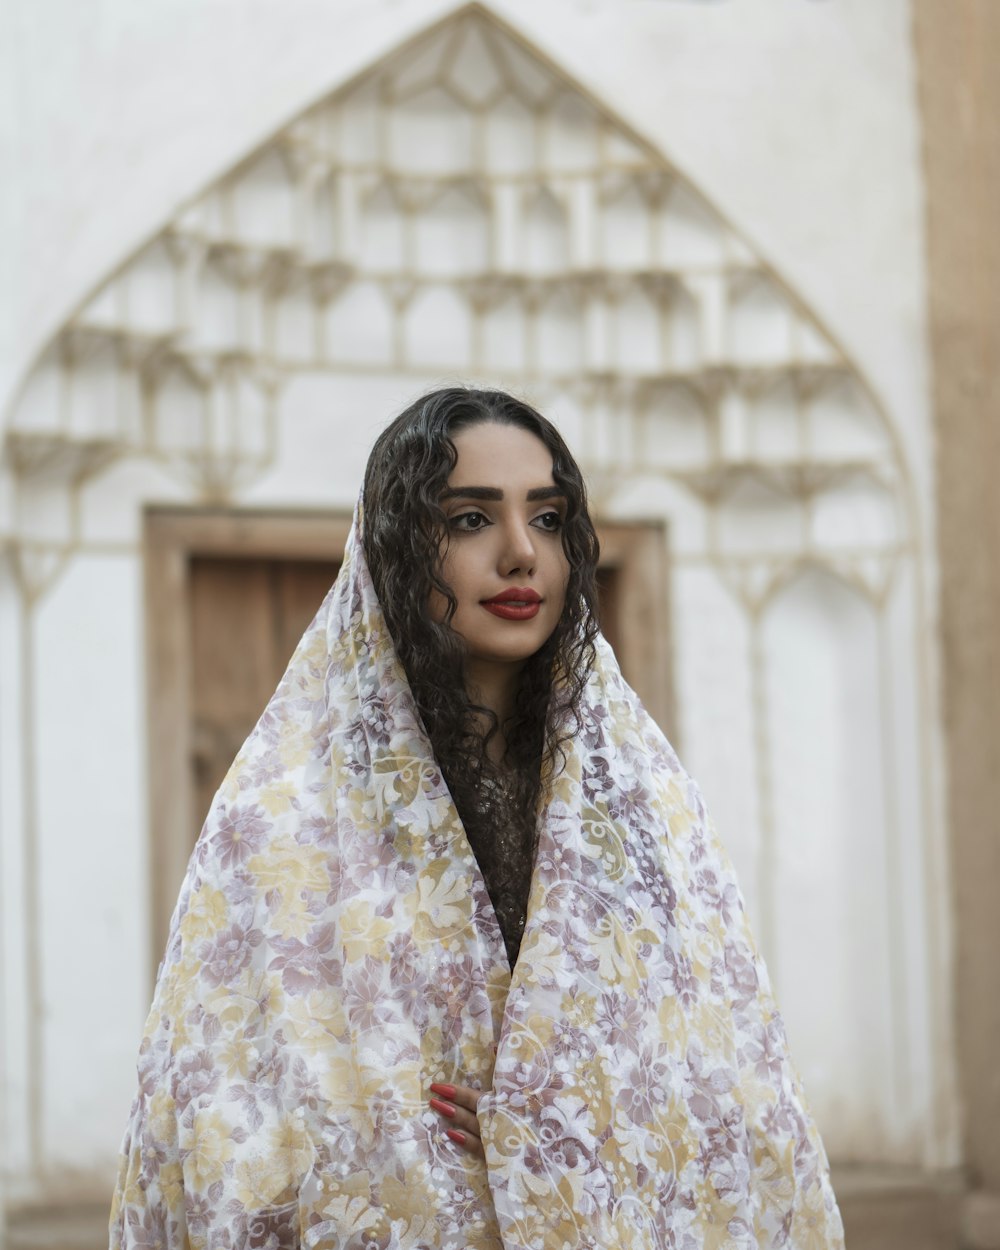 Frau in weißem und lila geblümtem Hijab